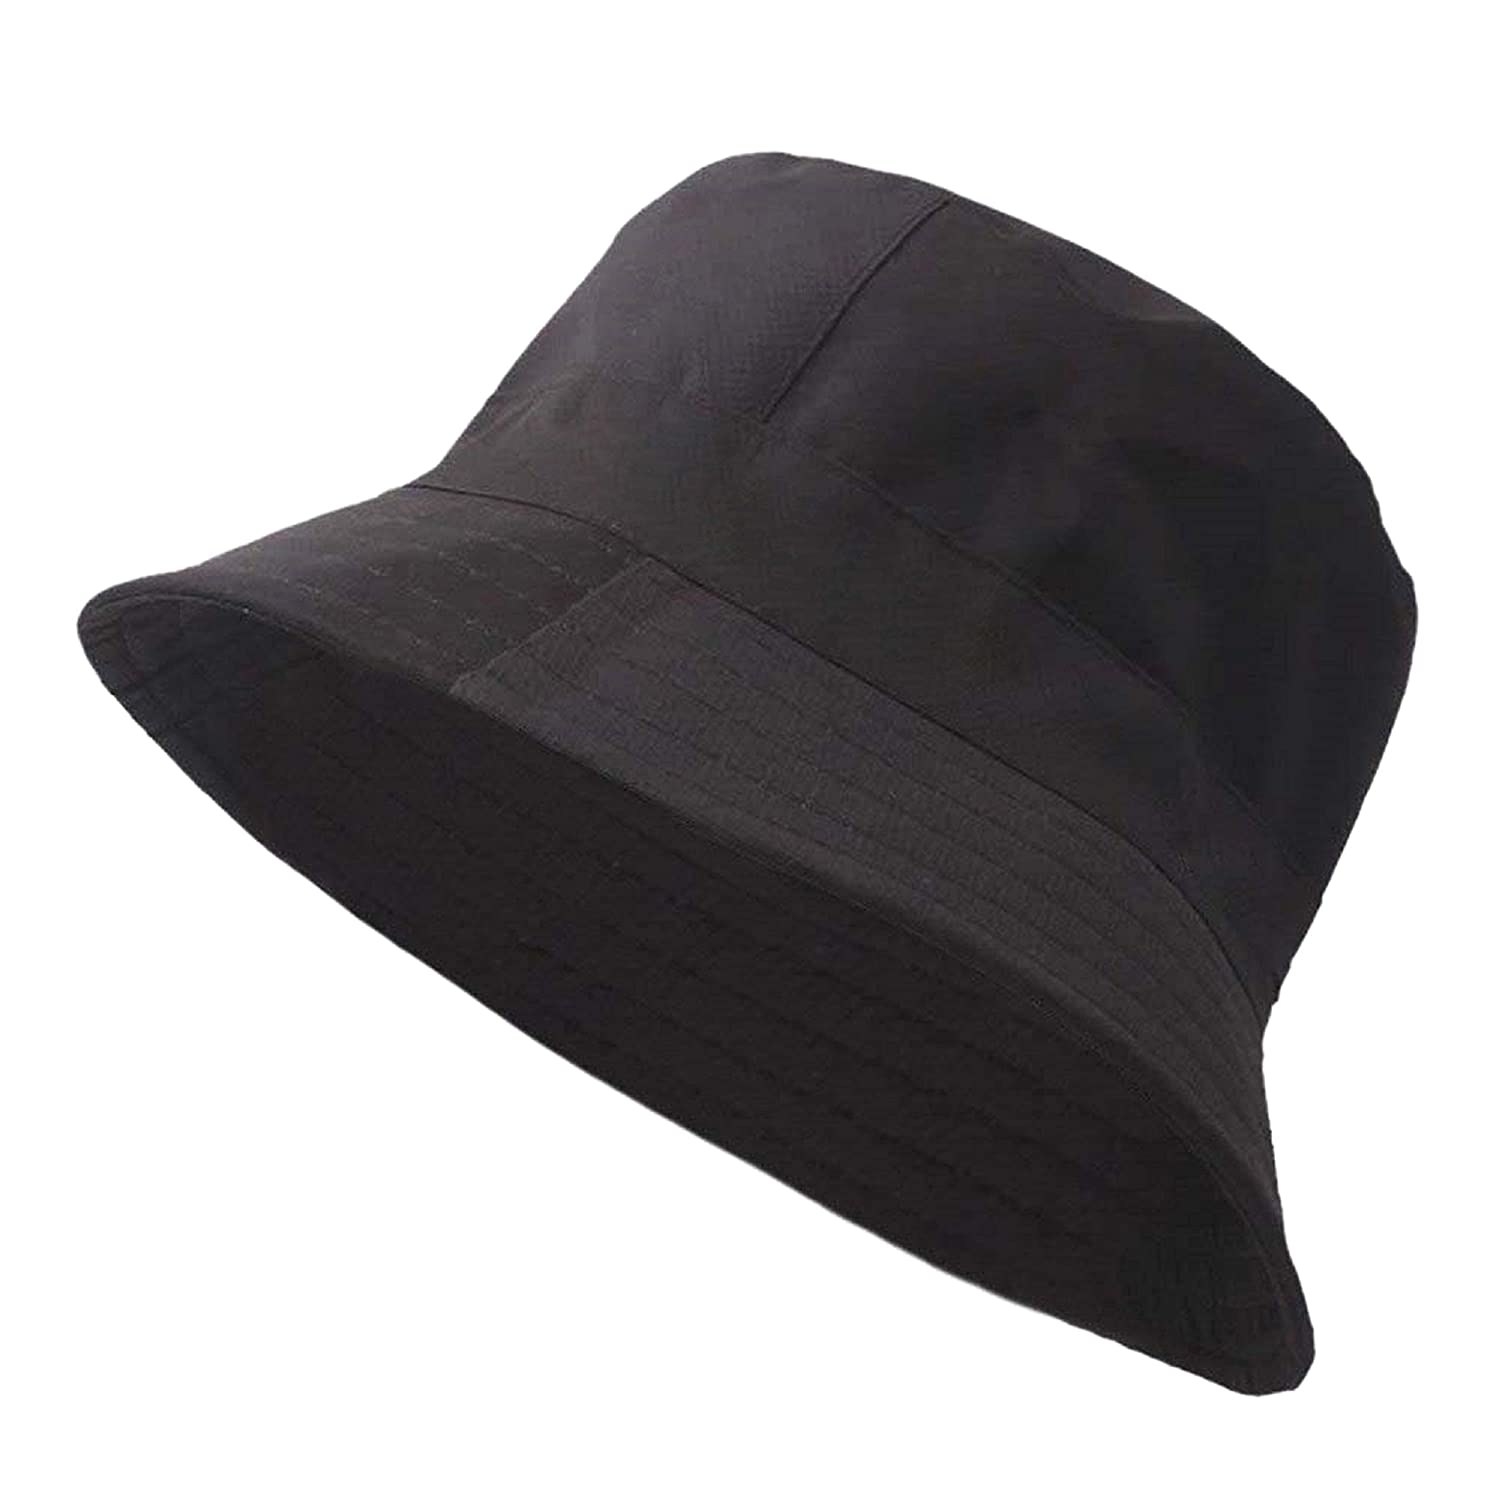 A black bucket hat.